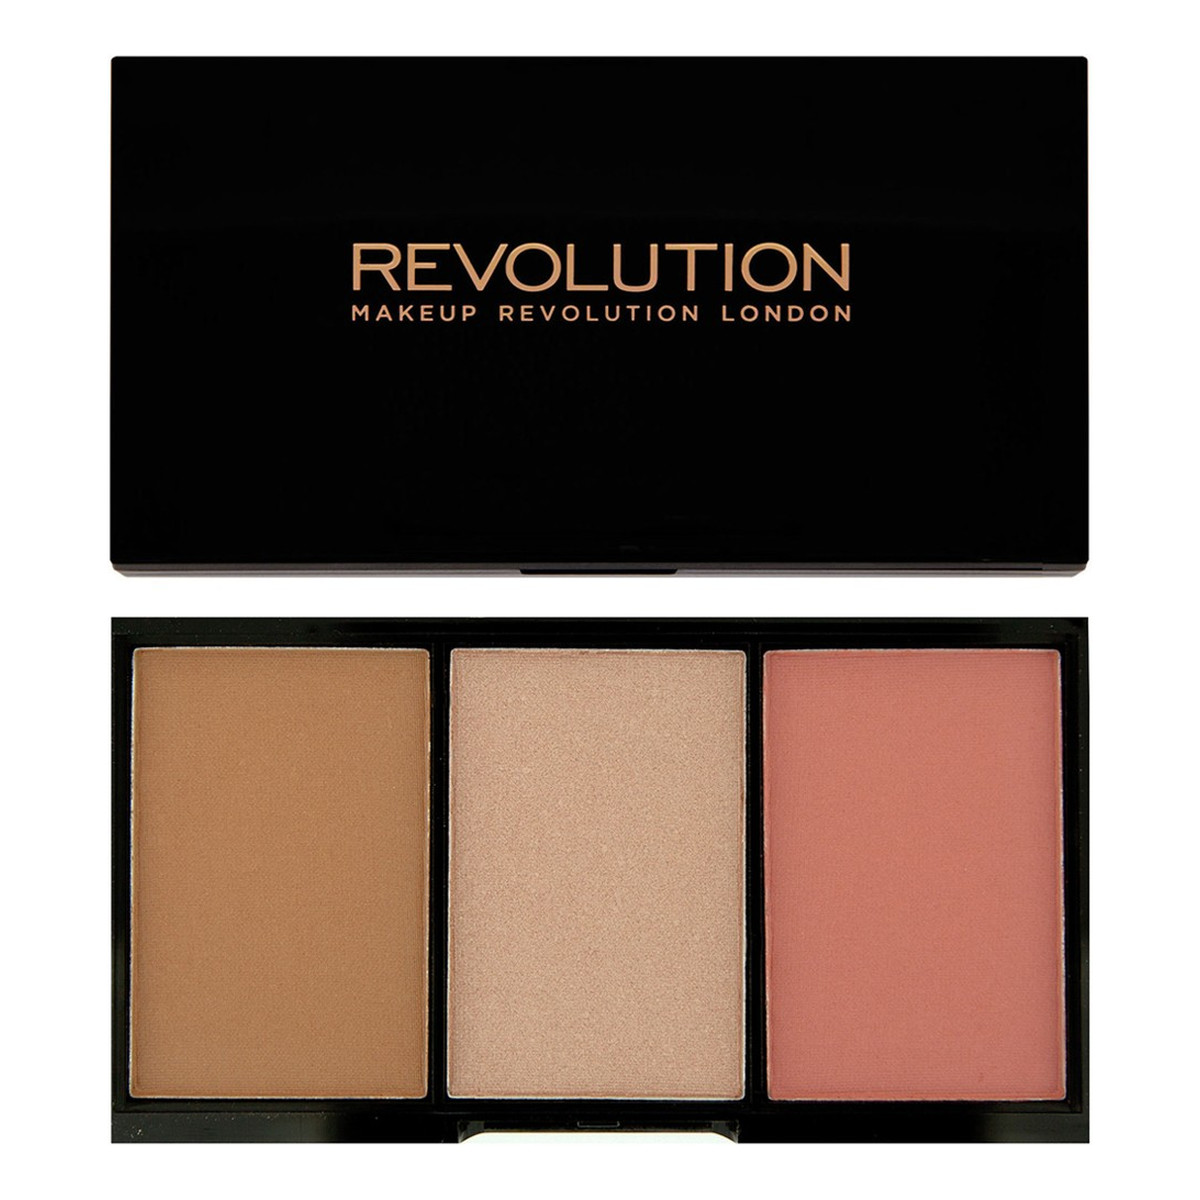 Makeup Revolution Iconic Pro Blush, Bronze & Brighten Palette Paleta Iconic Brązerów I Róży